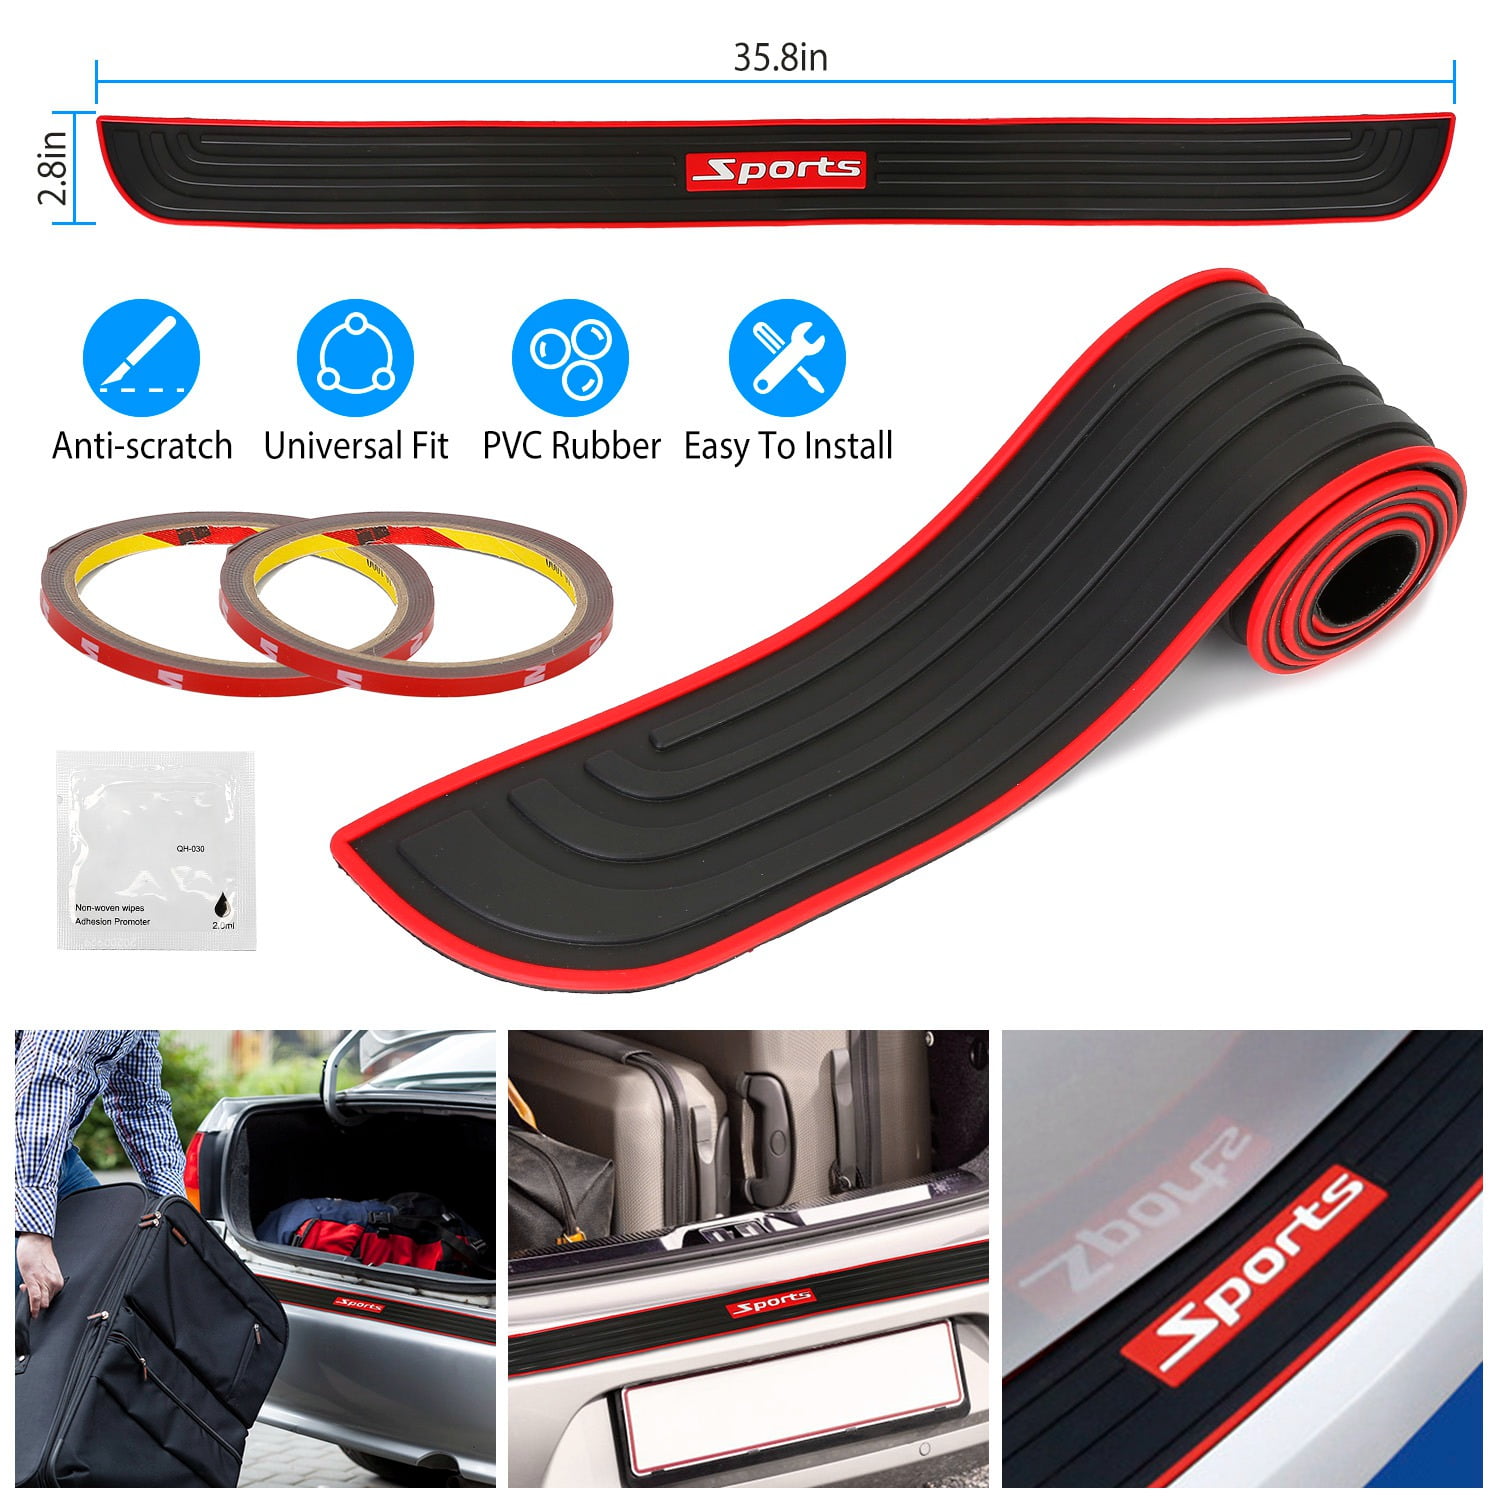 Anti-Slip Car Trunk Door Sill Plate Protector Rubber Scratch Strip